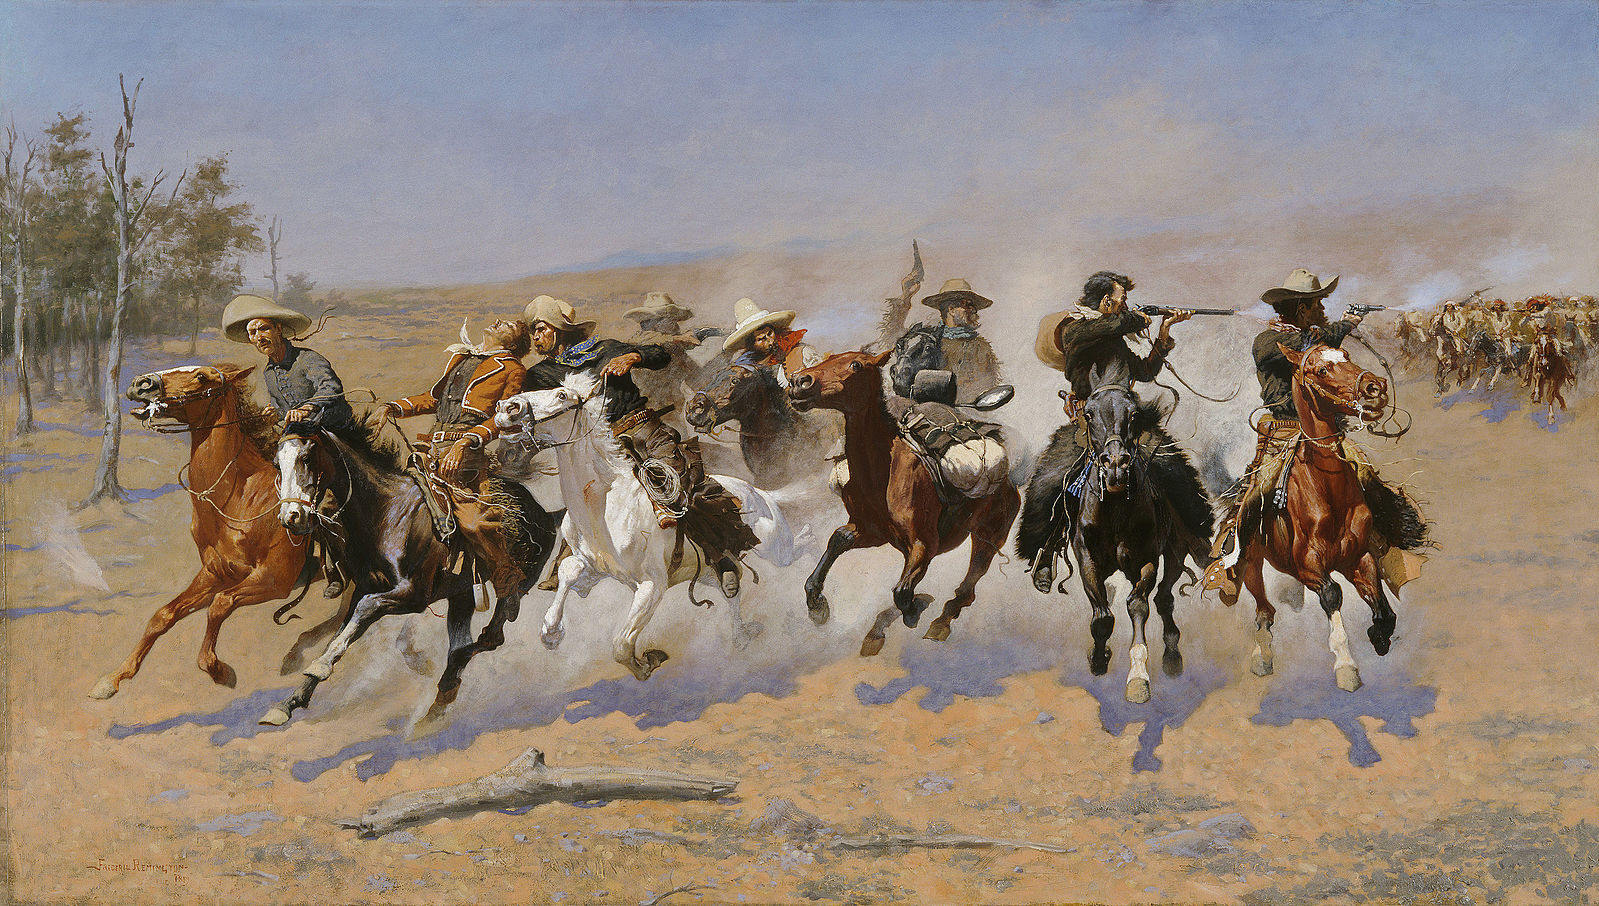 Several men on horseback galloping away from another set of men on horseback